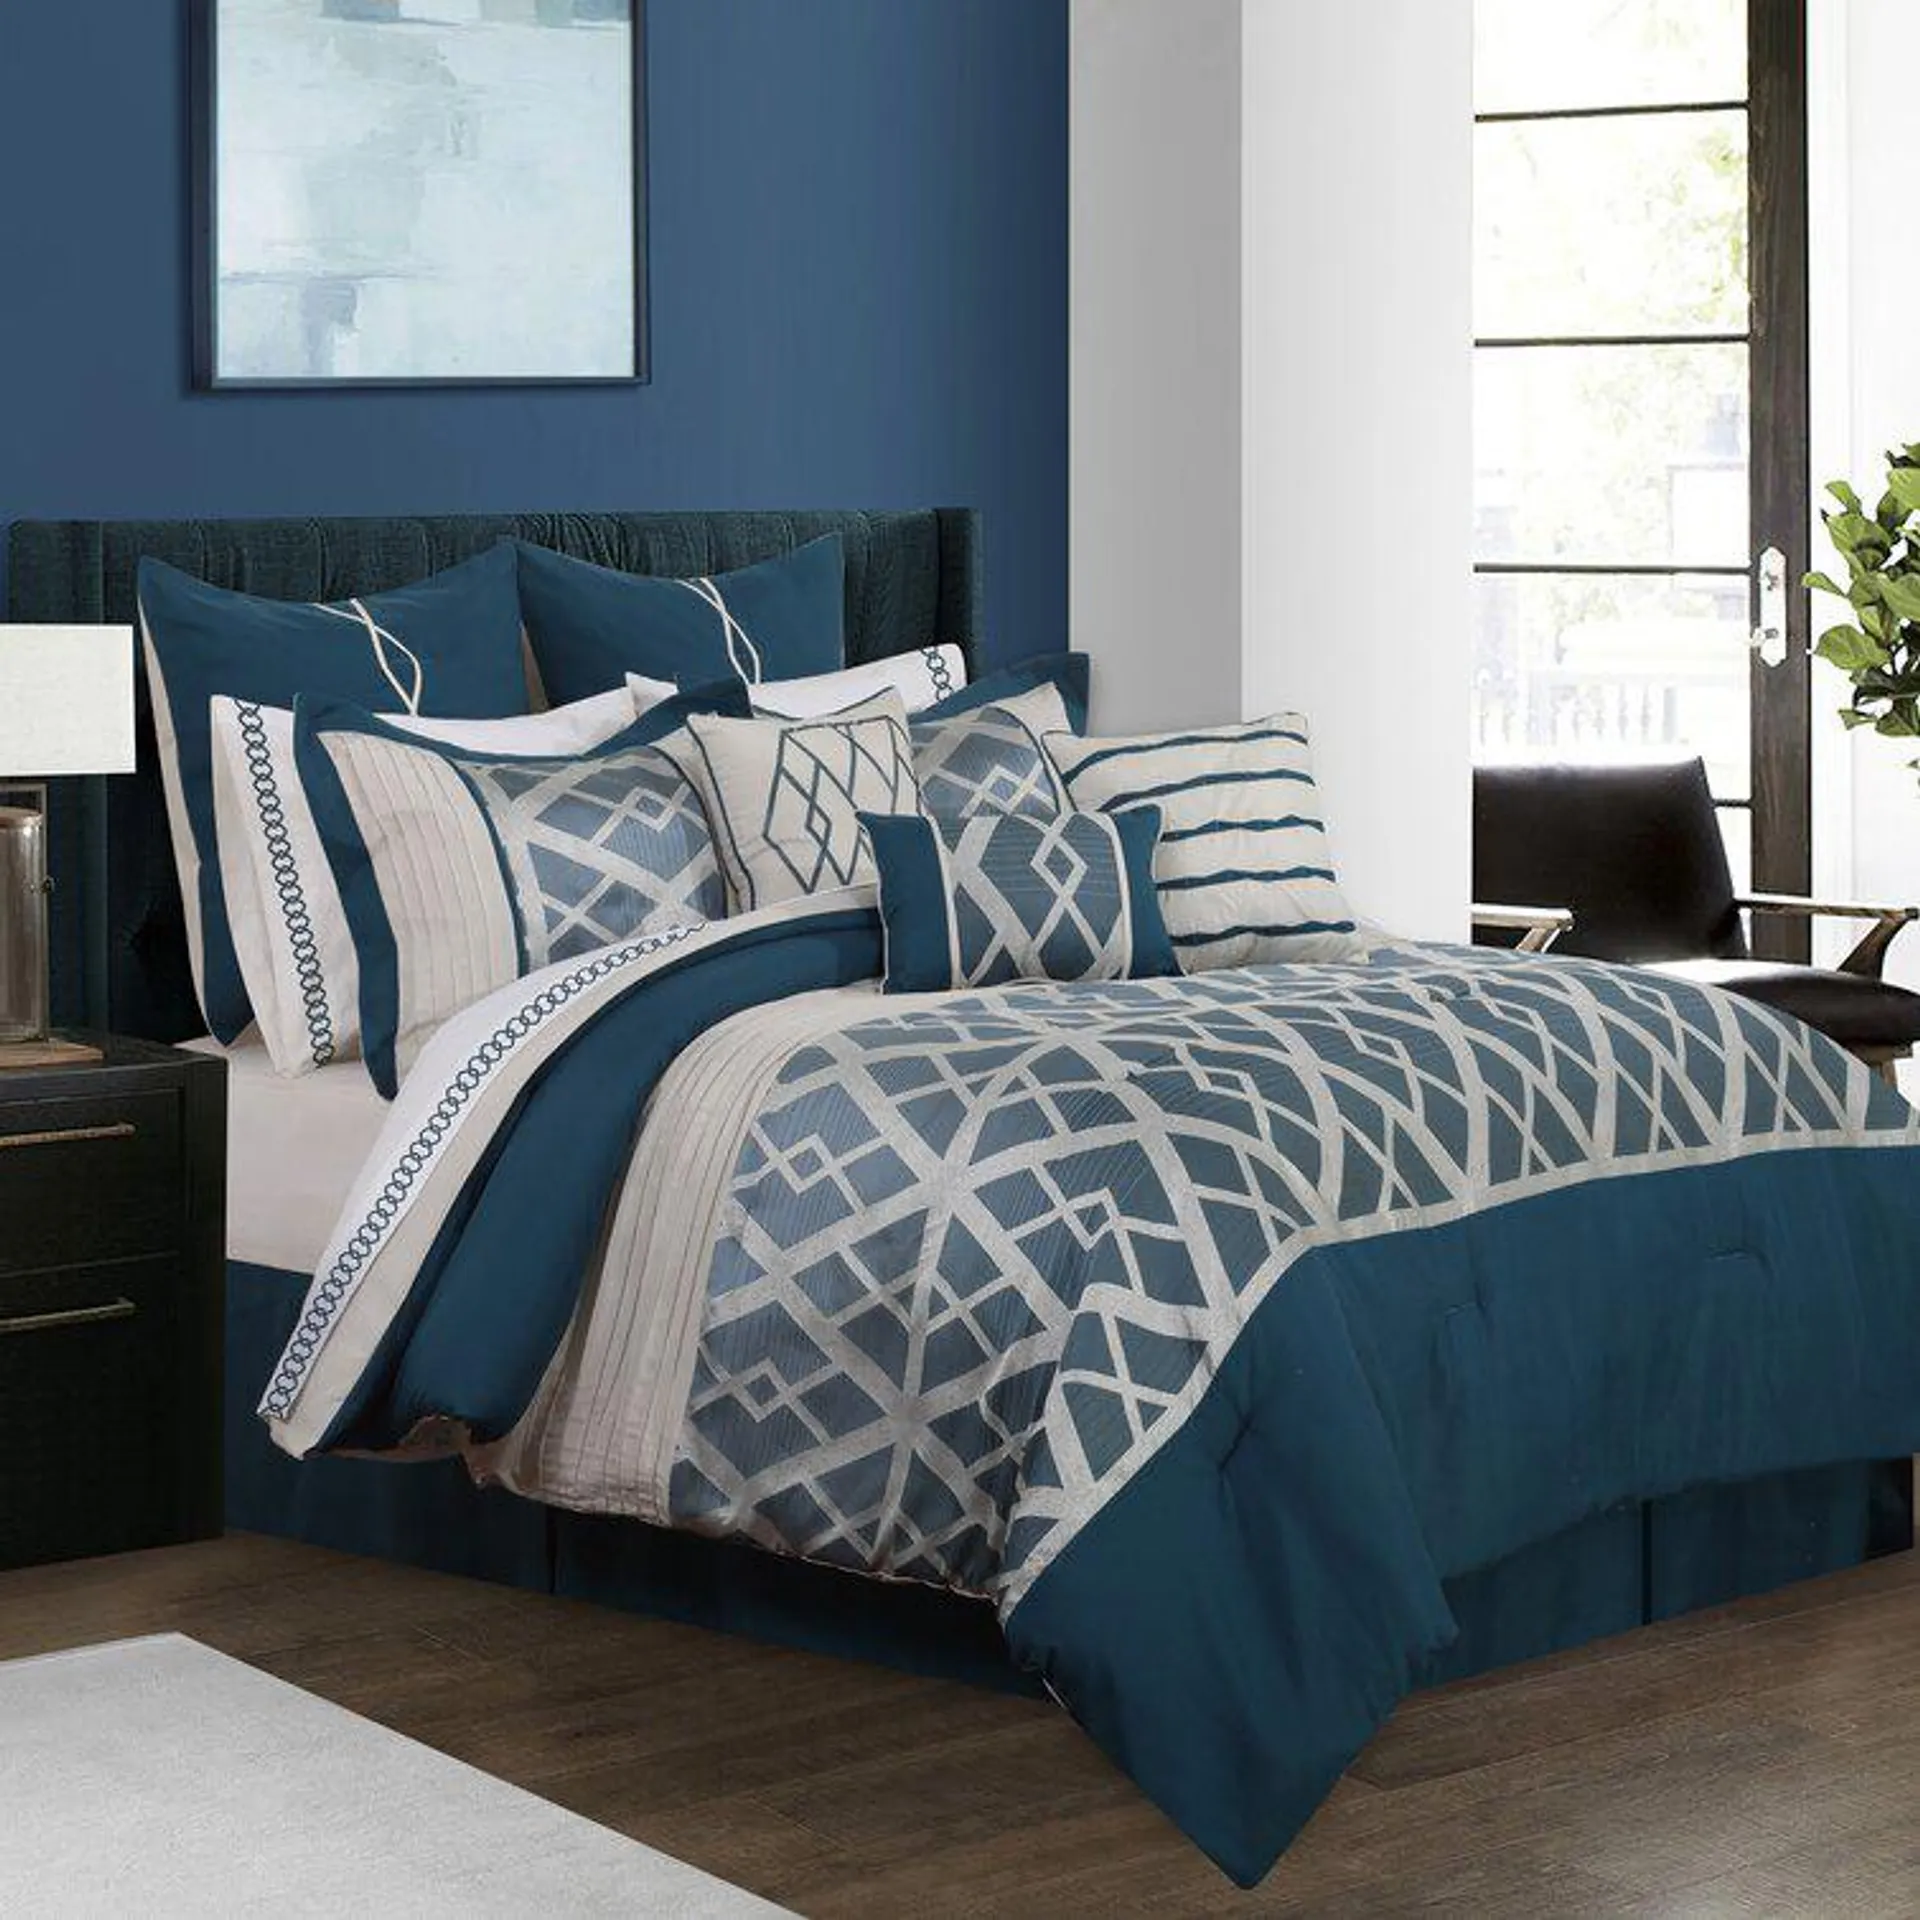 Covertt Blue And White Microfiber 7 Piece Comforter Set